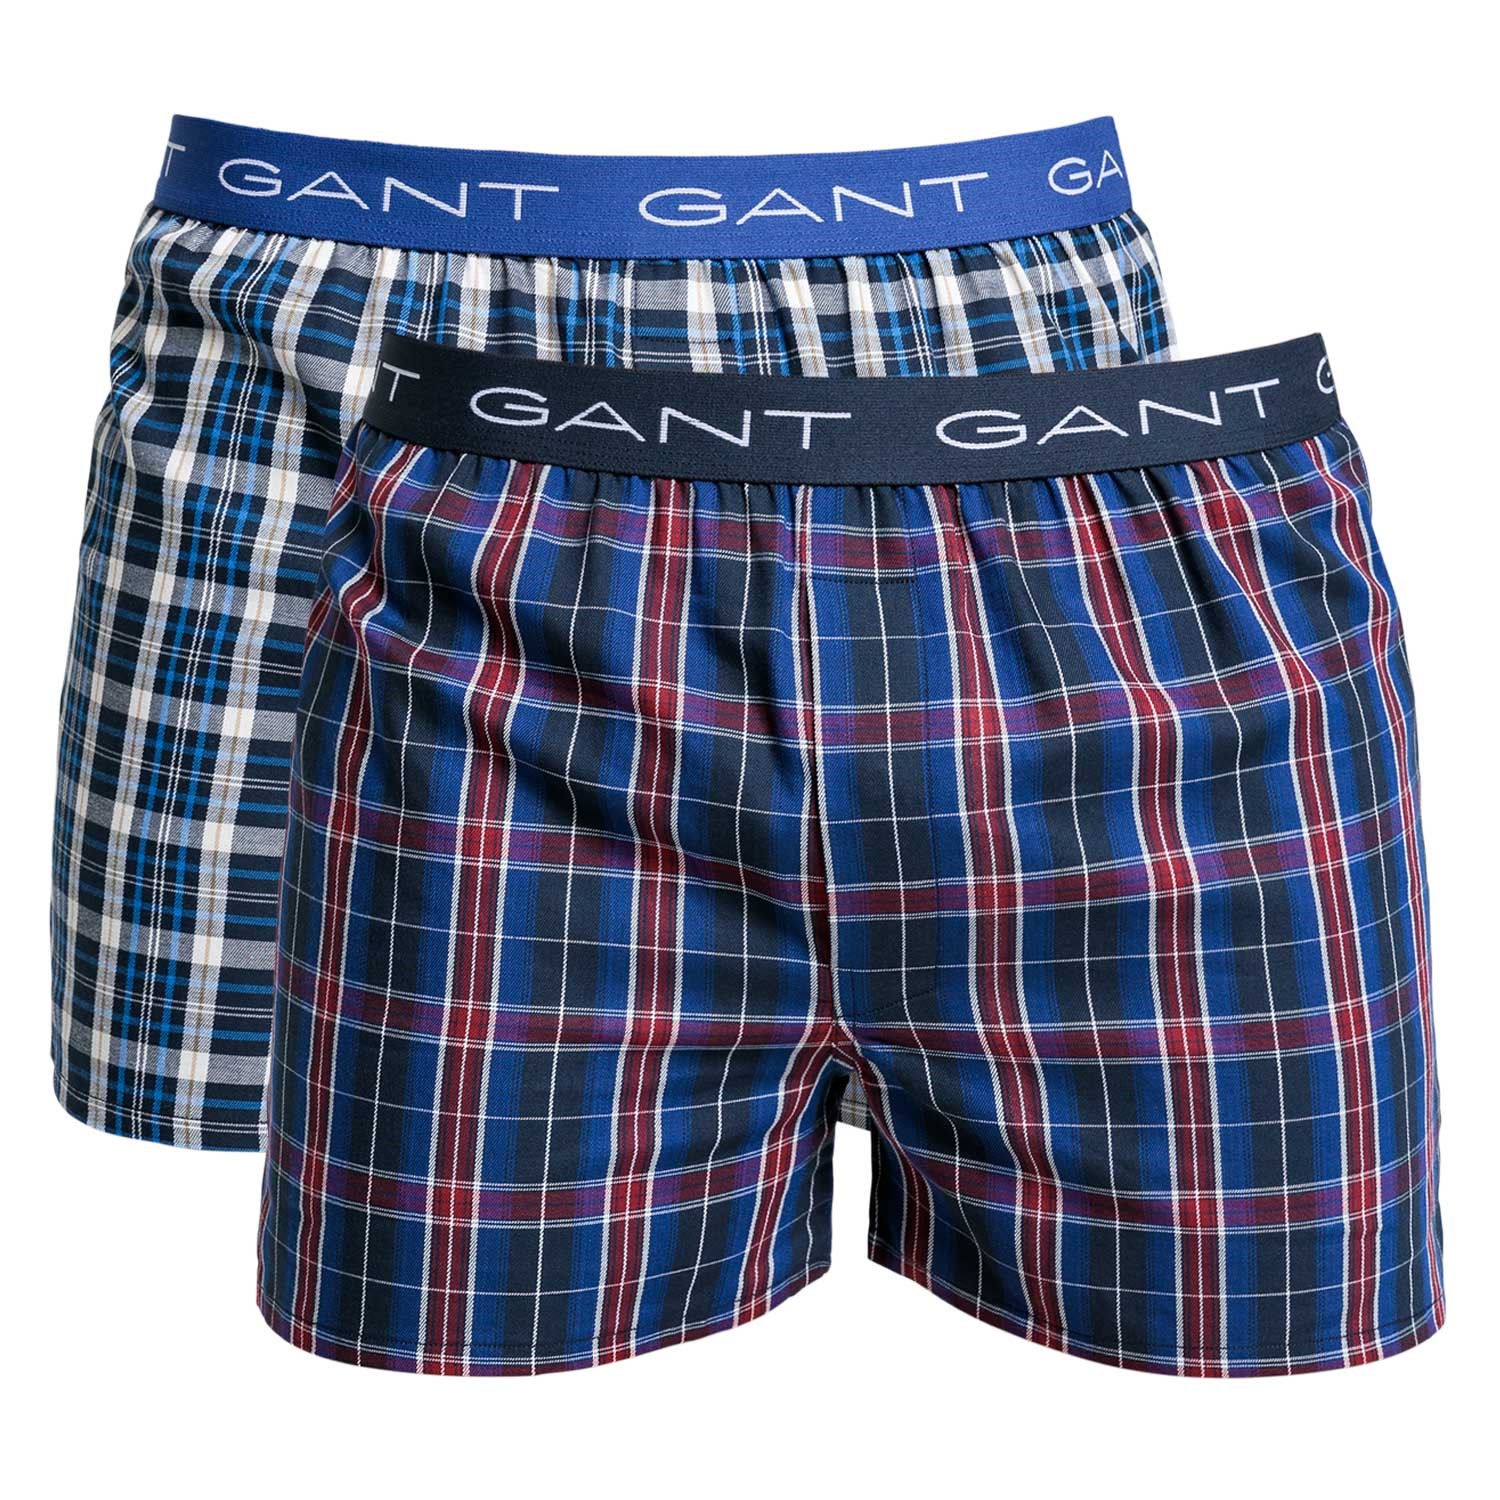 Gant Woven Cotton Boxer Shorts